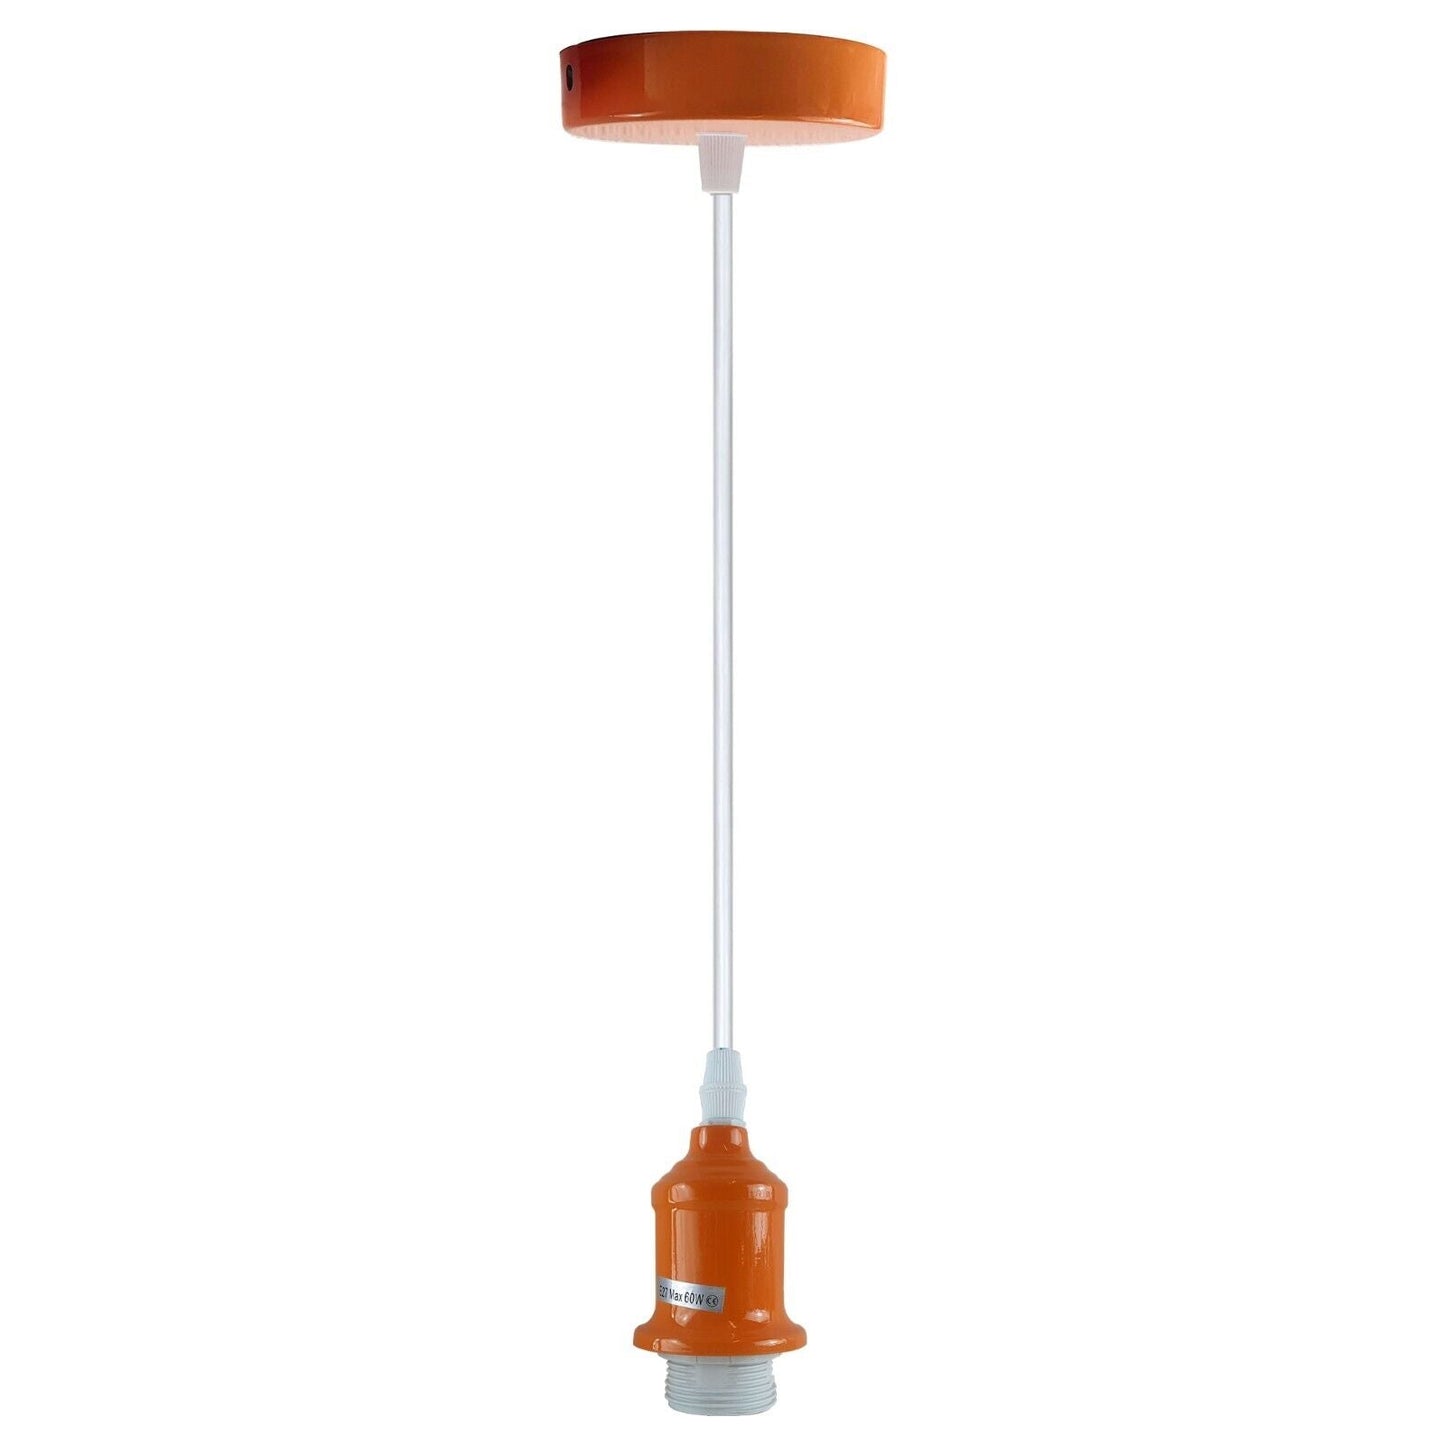 Orange E28 Hanging Lamp Holder - Add a Vibrant Pop of Color to Your Lighting Setup